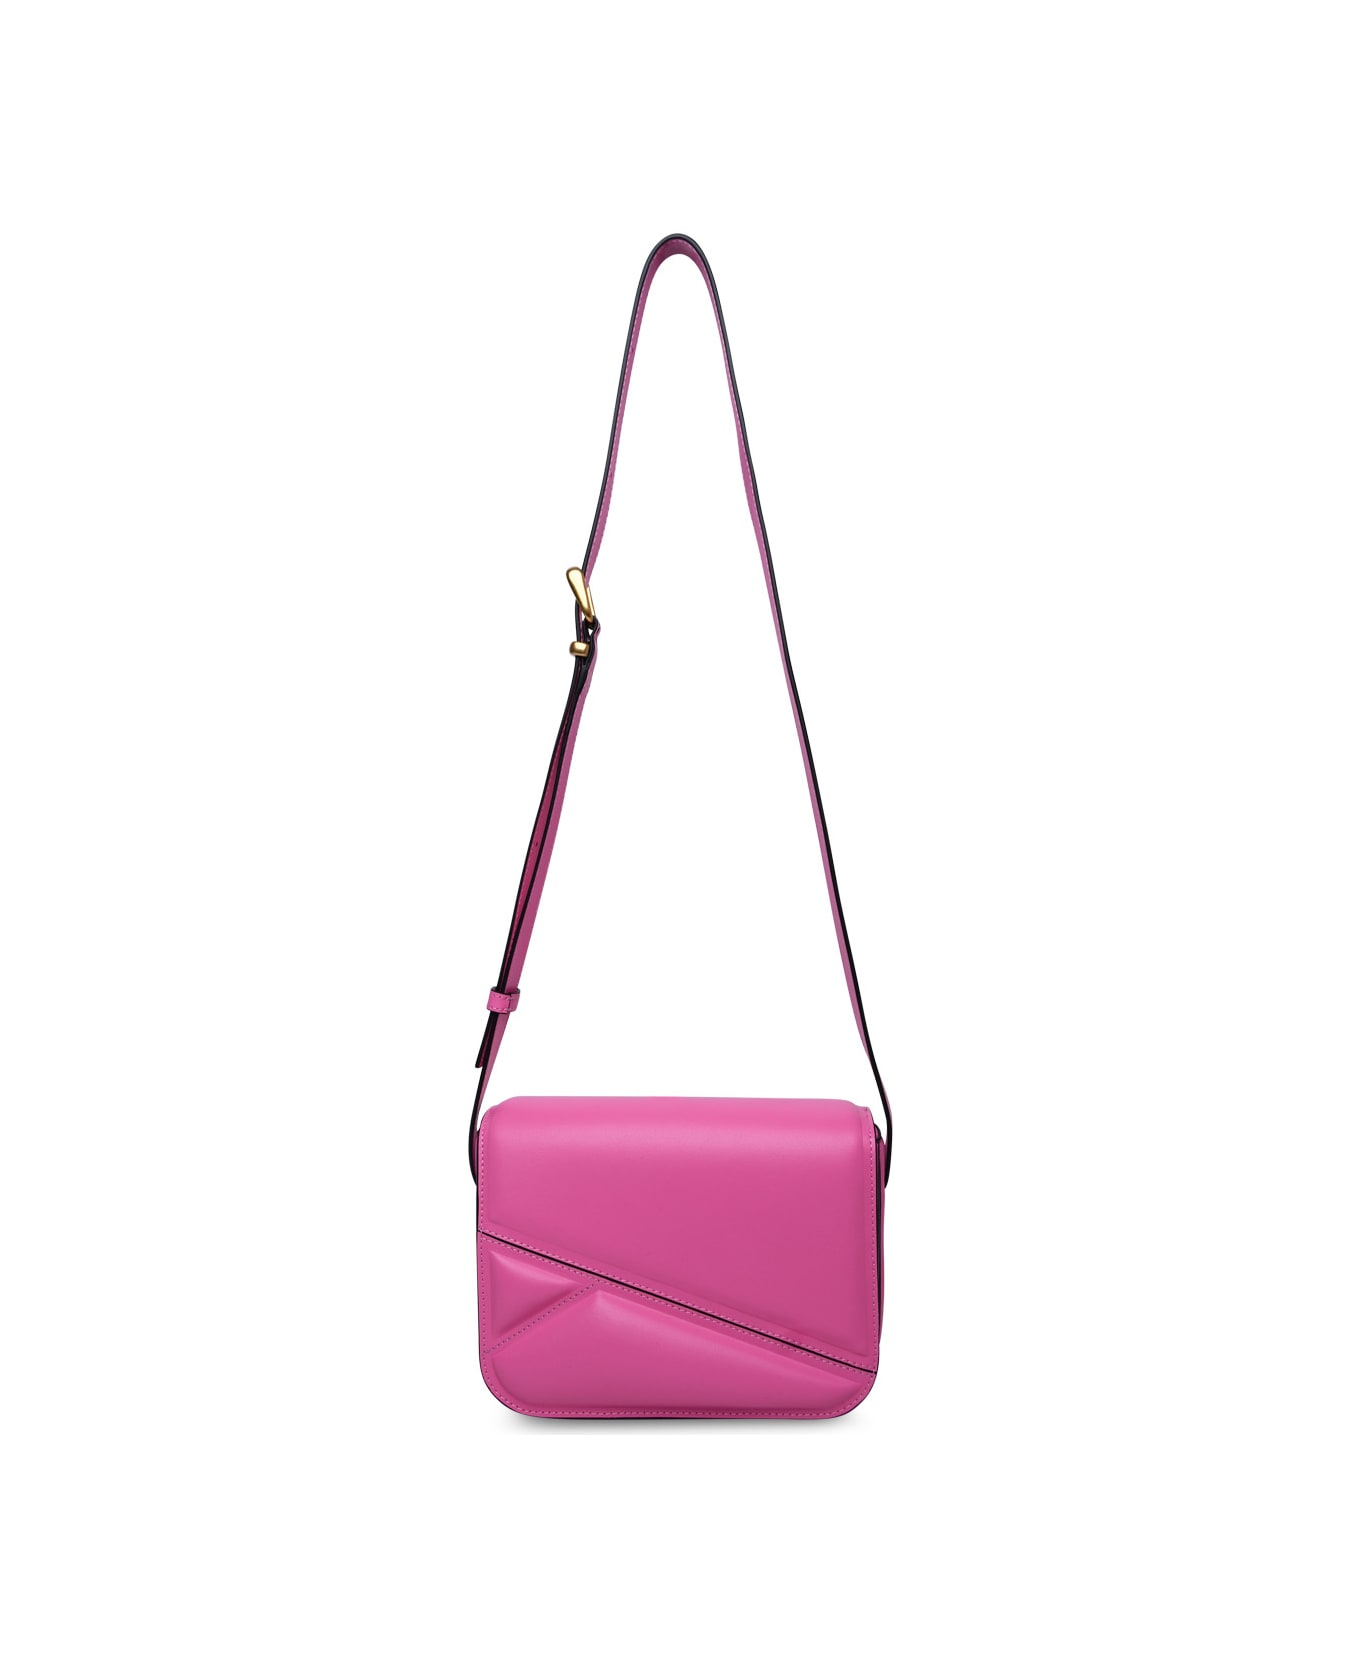 Wandler Medium 'oscar Trunk' Bag In Pink Calf Leather - Fuchsia